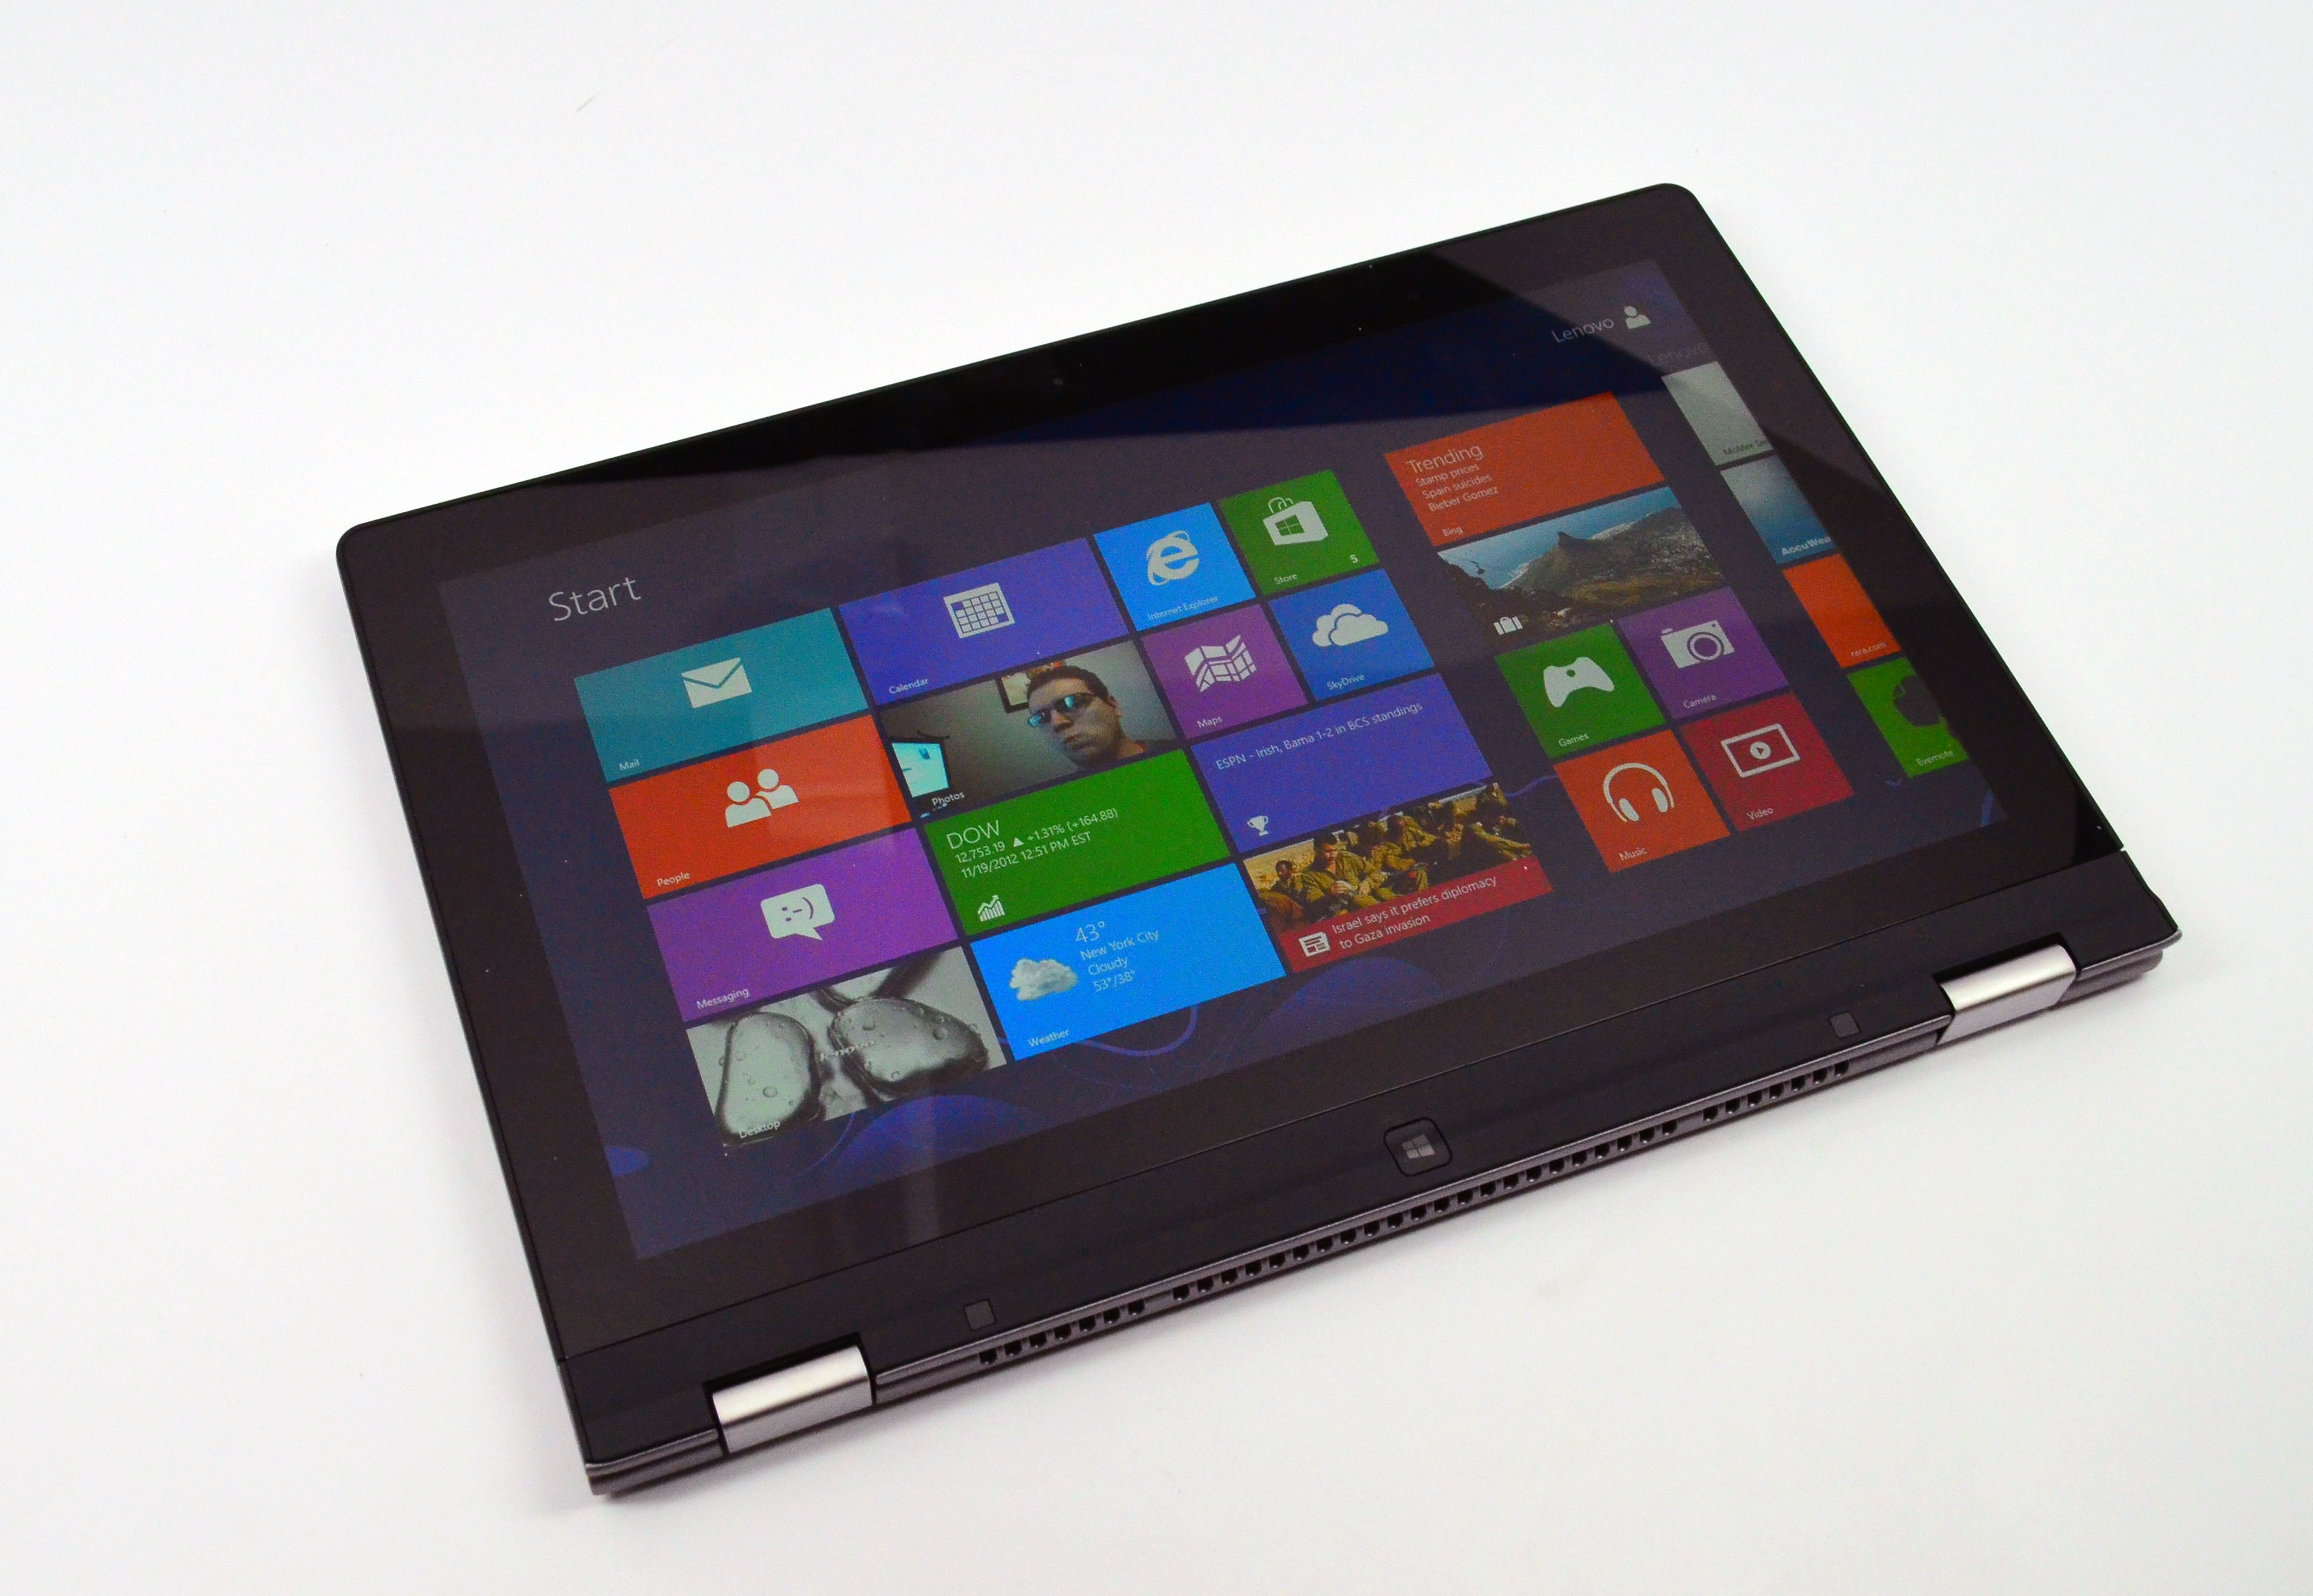 Lenovo IdeaPad Yoga 13 Review: Ultrabook Convertible With Flexibility